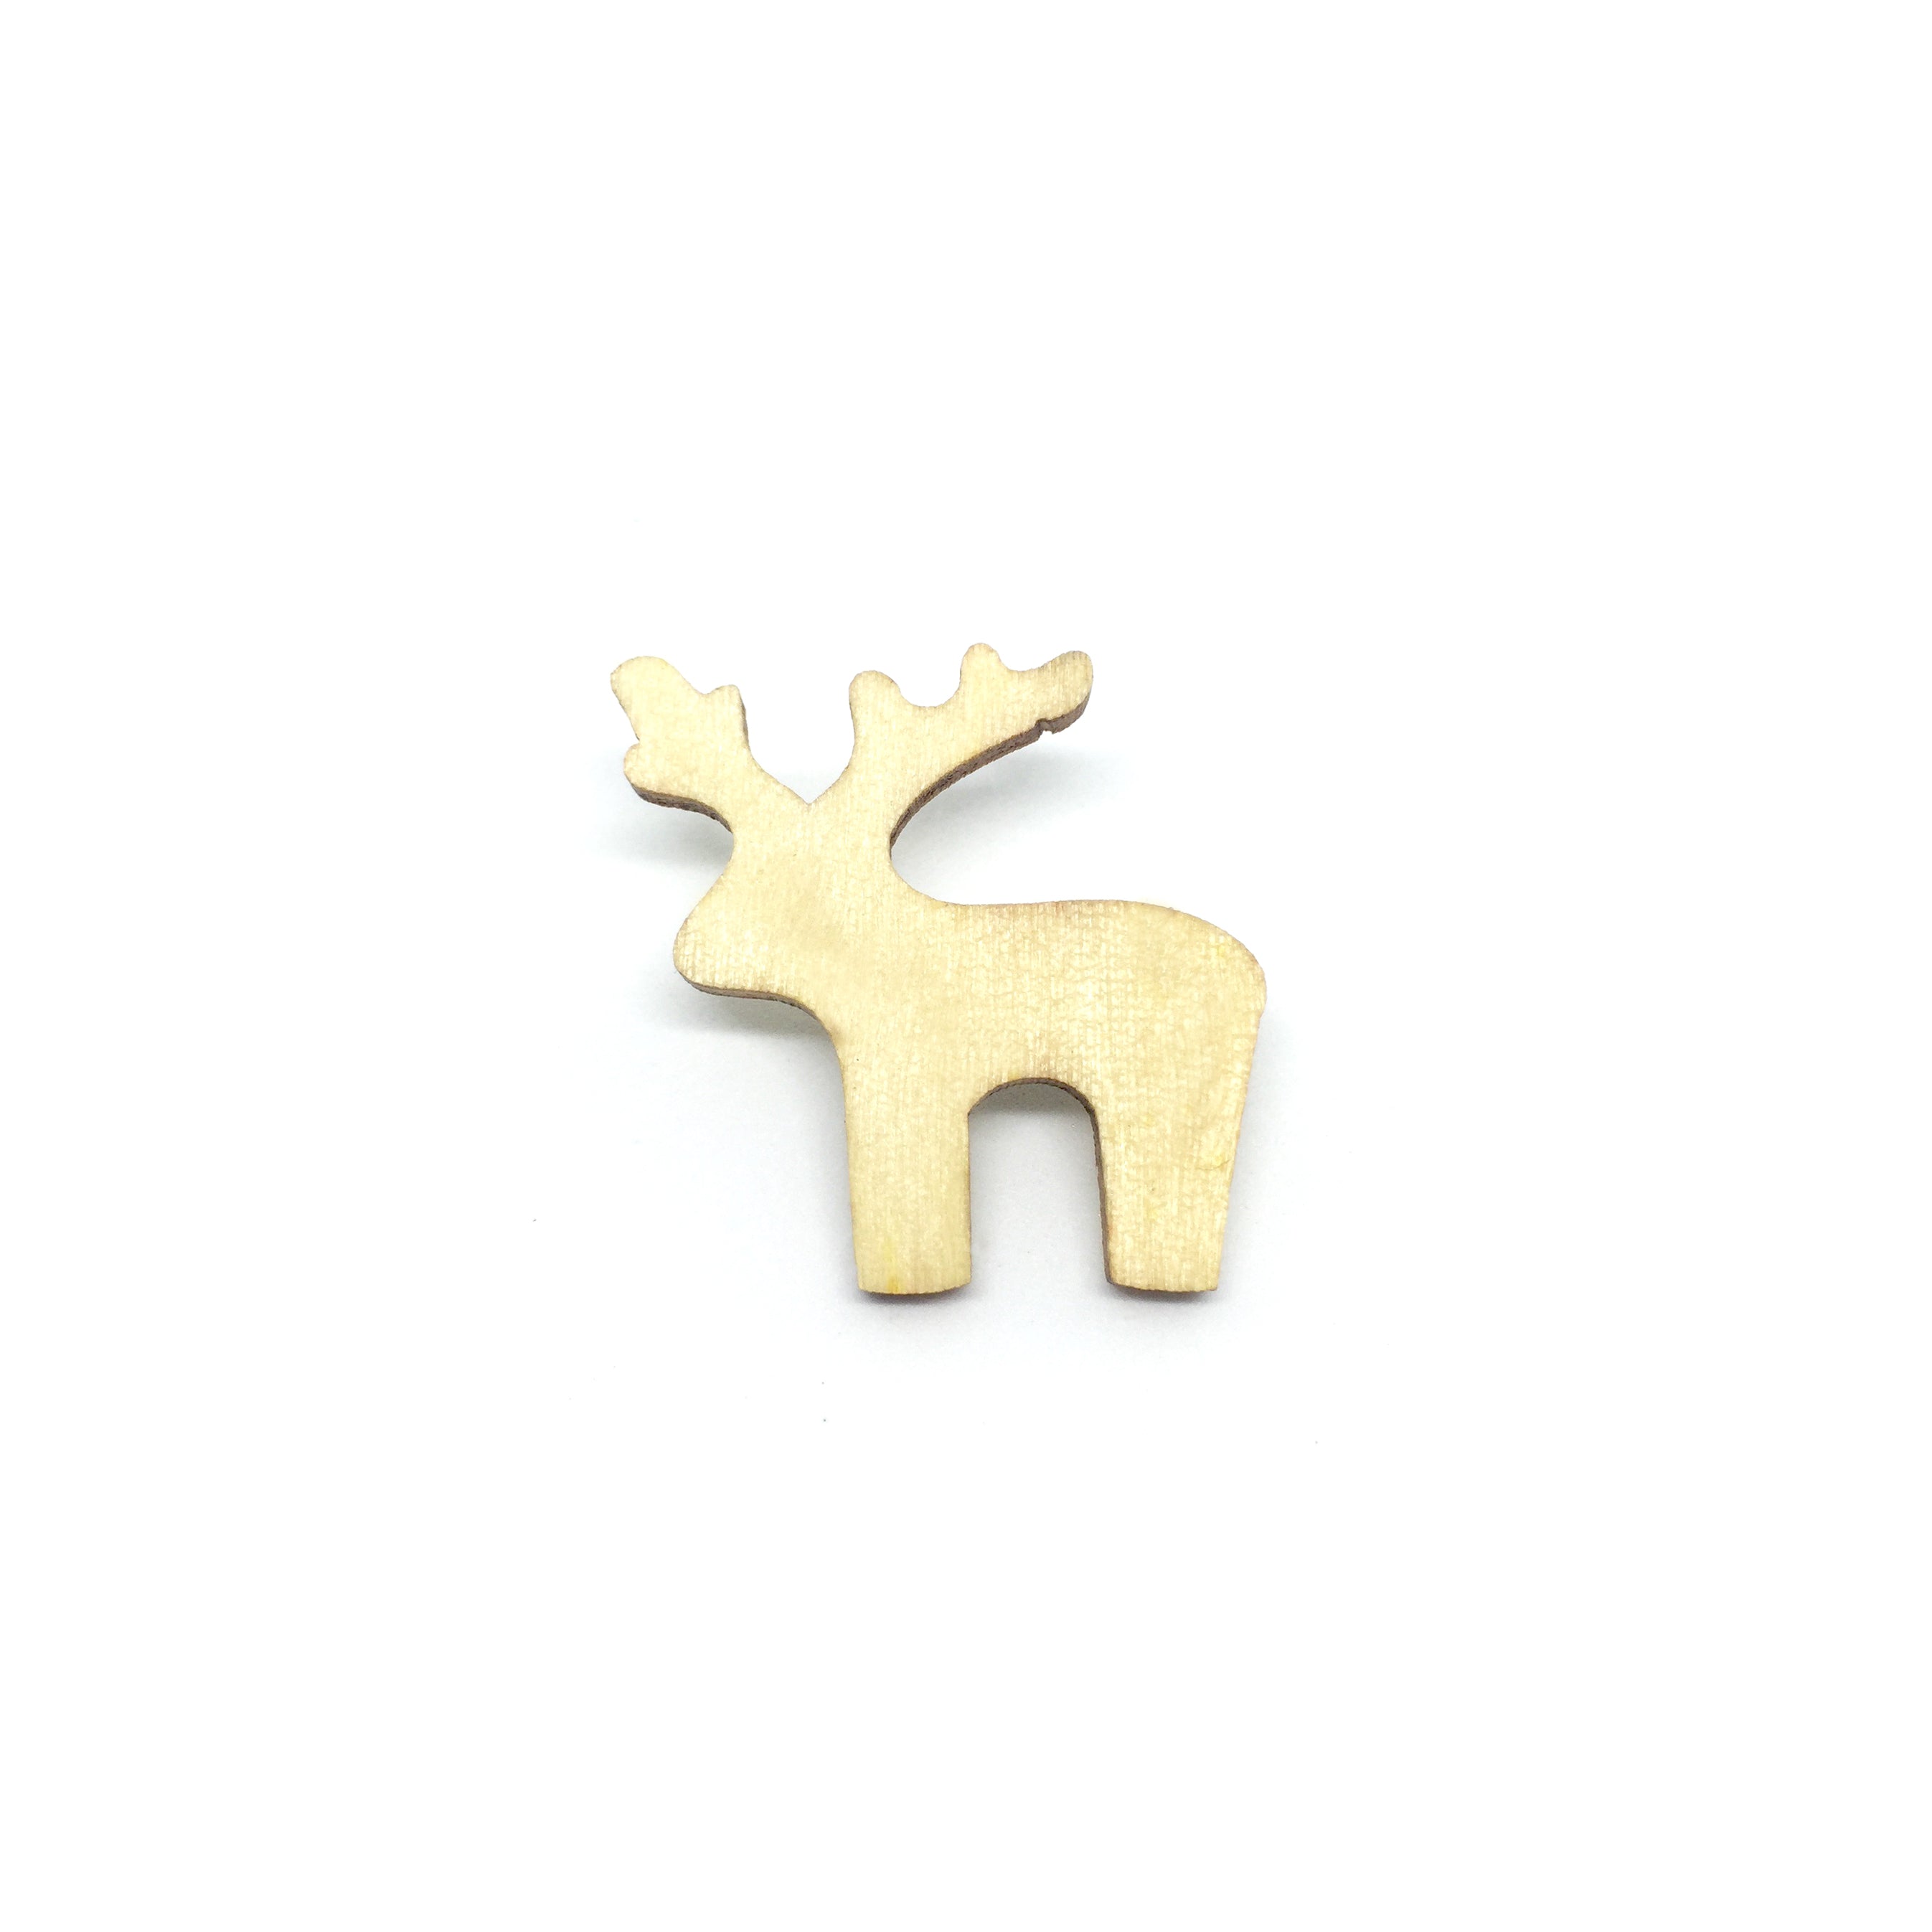 Lovely Deer Wooden Brooch Pin - LM